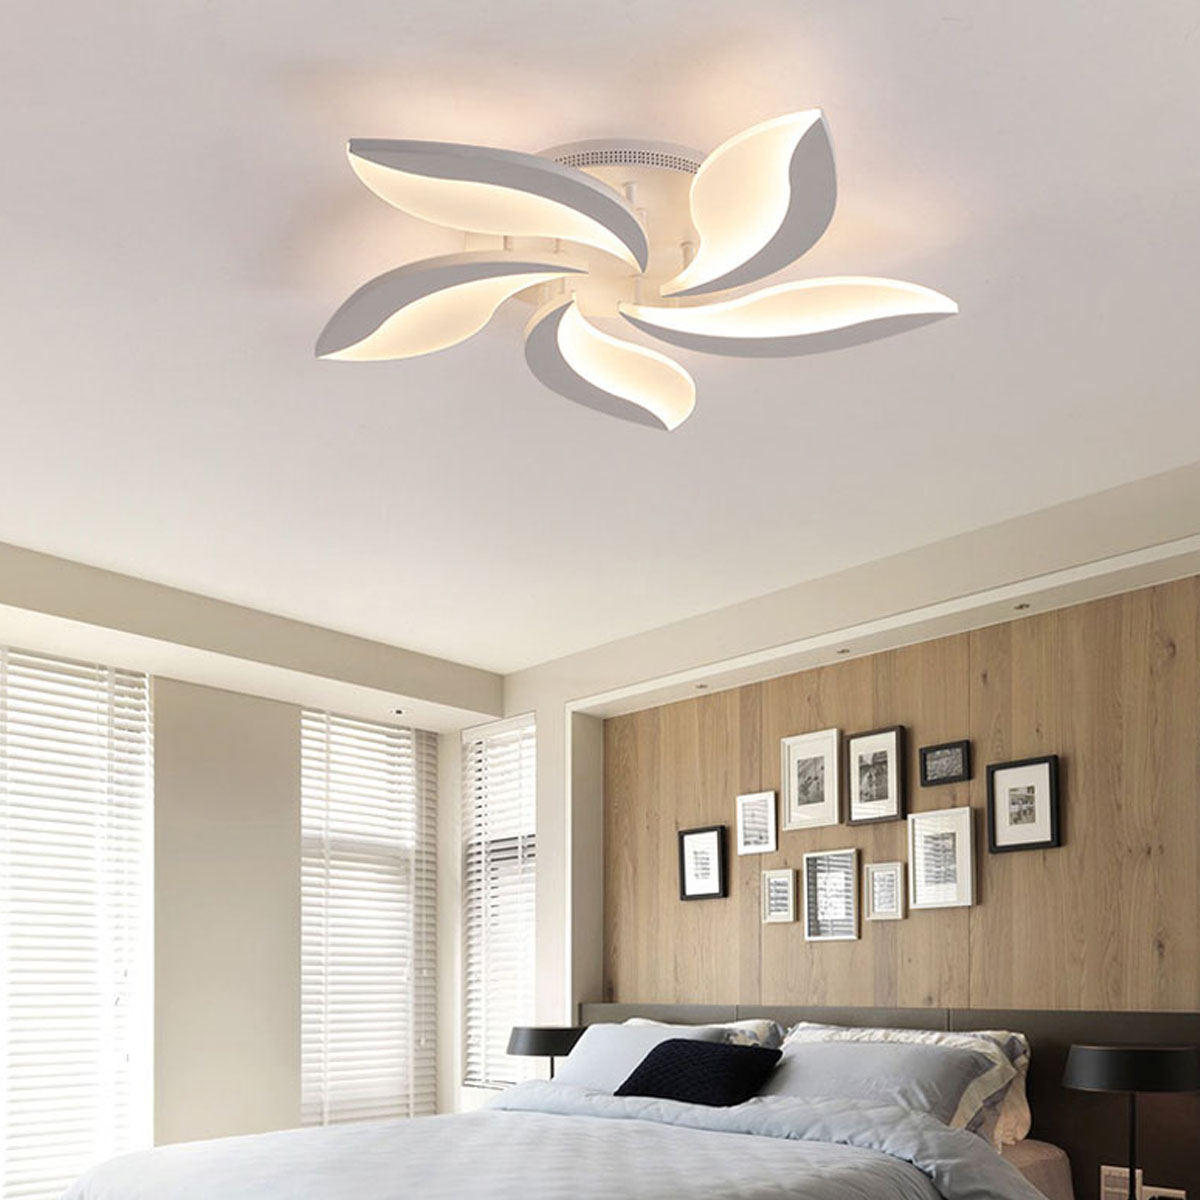 Find 110 220V LED Ceiling Light Fixture Pendant Lamp Lighting Flush Mount Room Chandelier for Sale on Gipsybee.com with cryptocurrencies